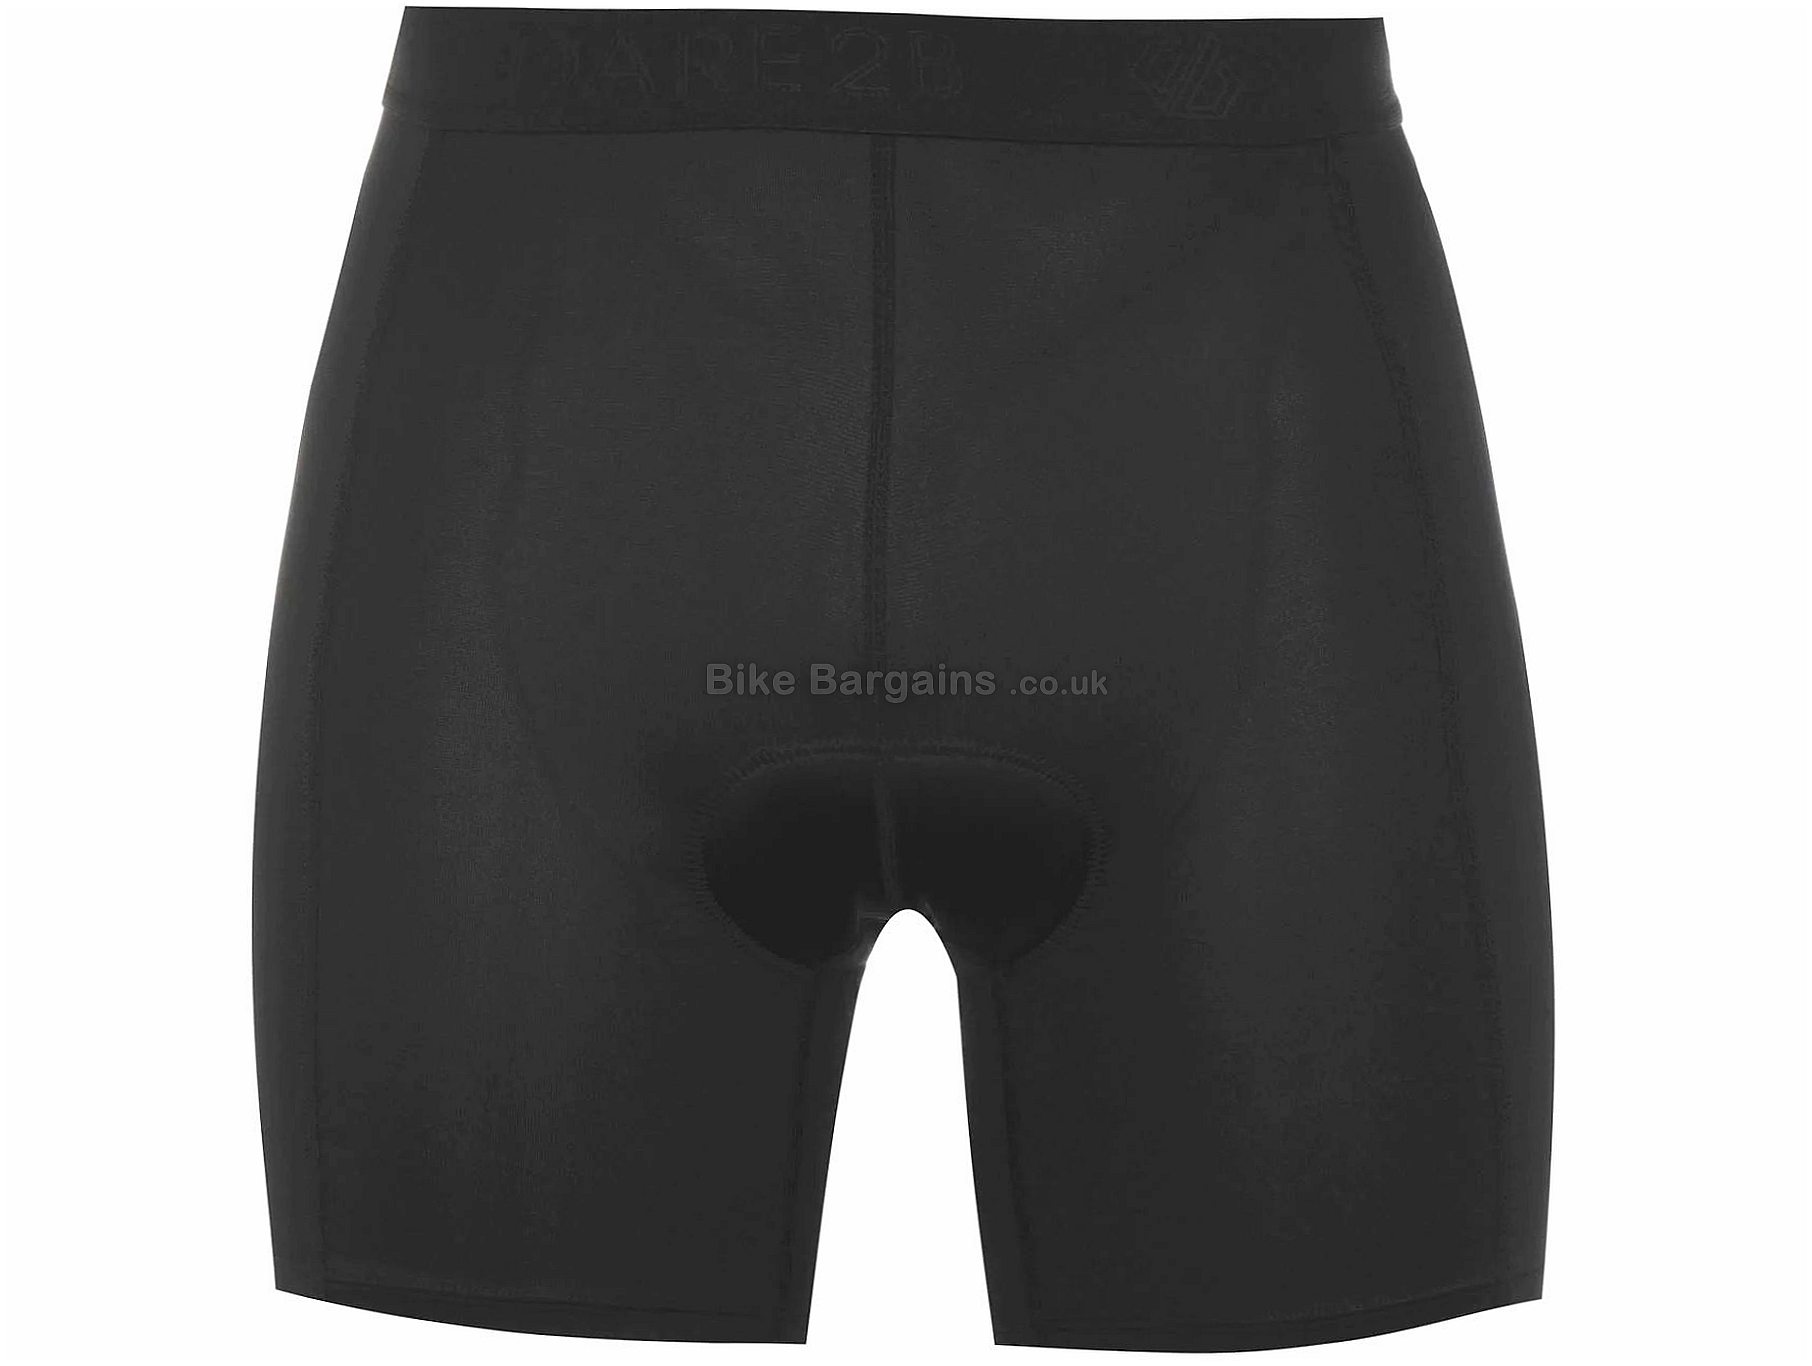 Bike L628 womens compression softball soccer sliding shorts NEW Dark Green XL 